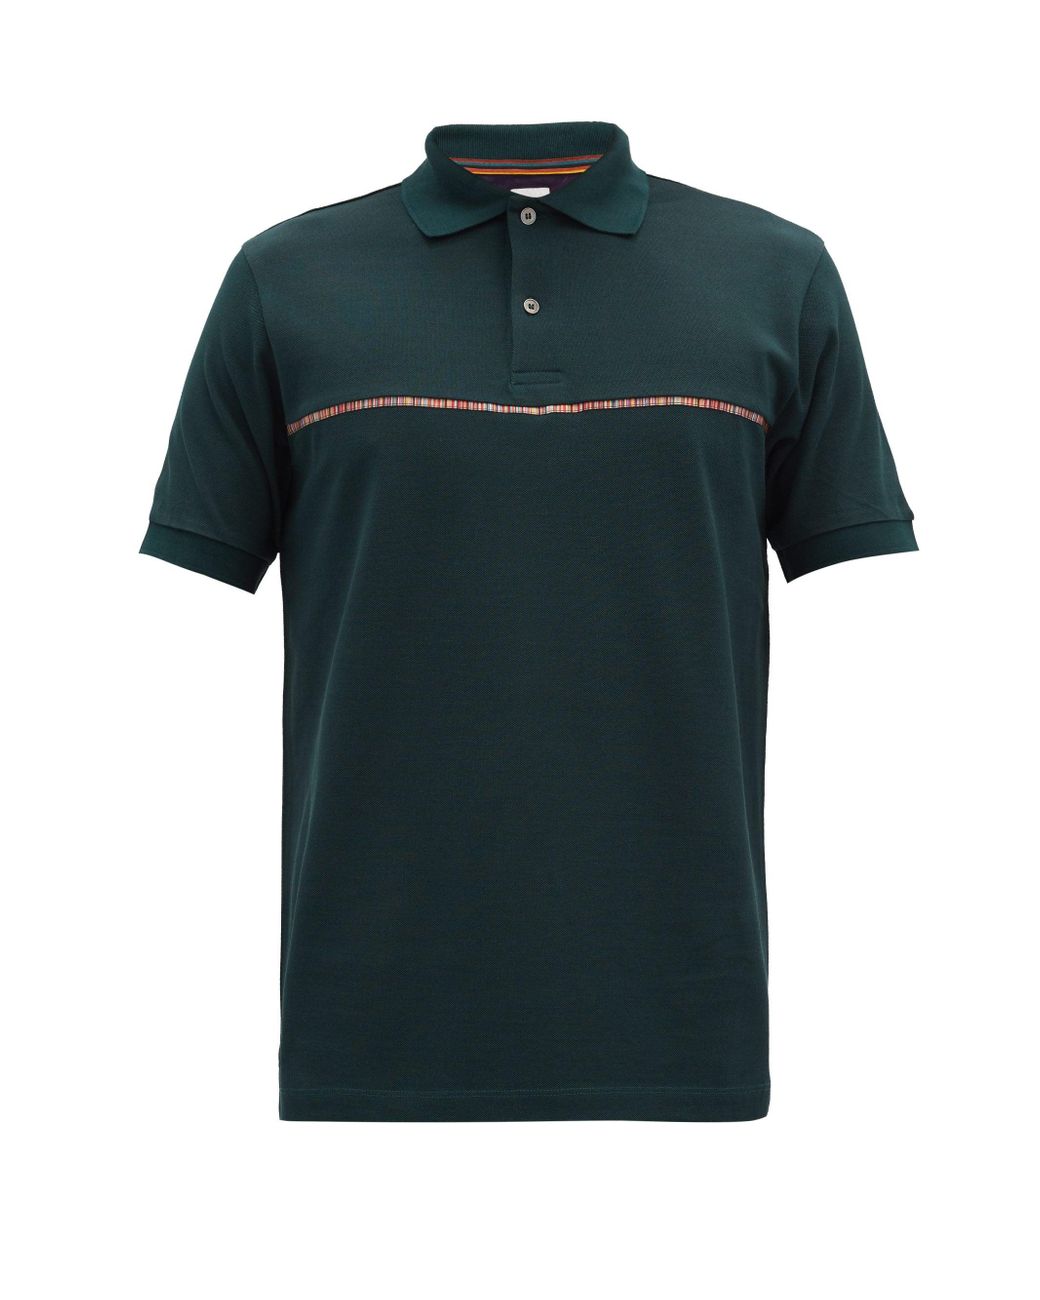 Paul Smith Signature-stripe Cotton-piqué Polo Shirt in Green for Men - Lyst